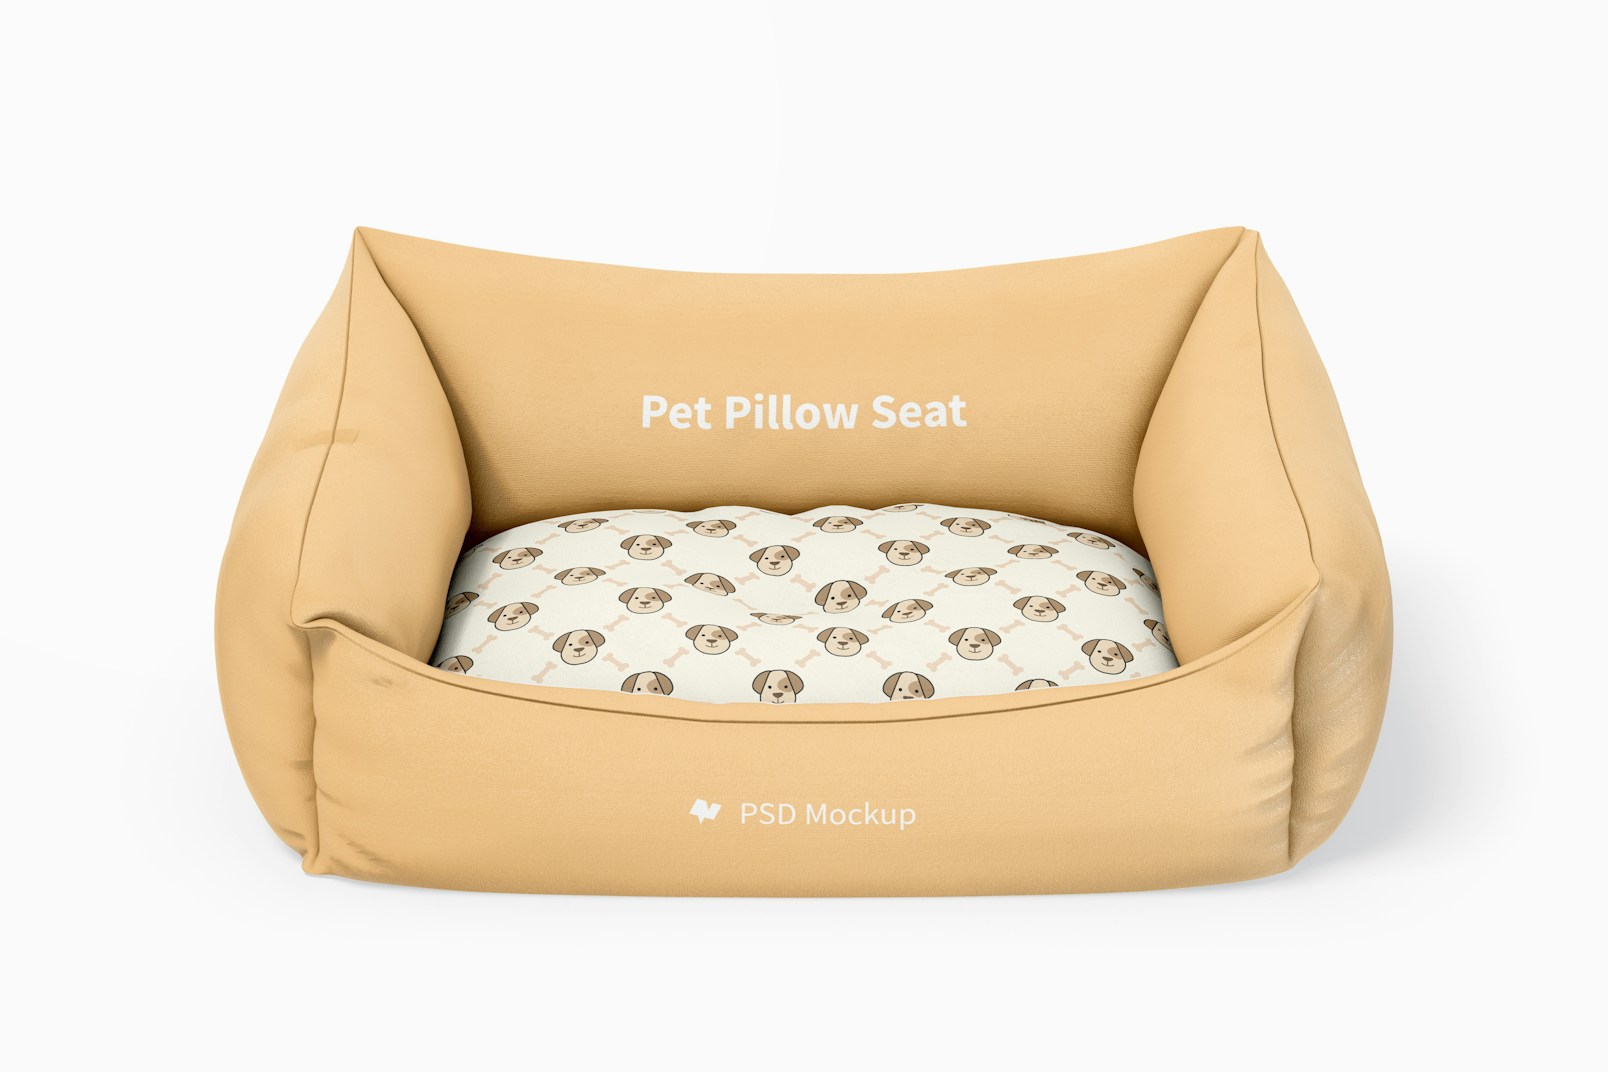 Pet Pillow Seat Mockup, Front View